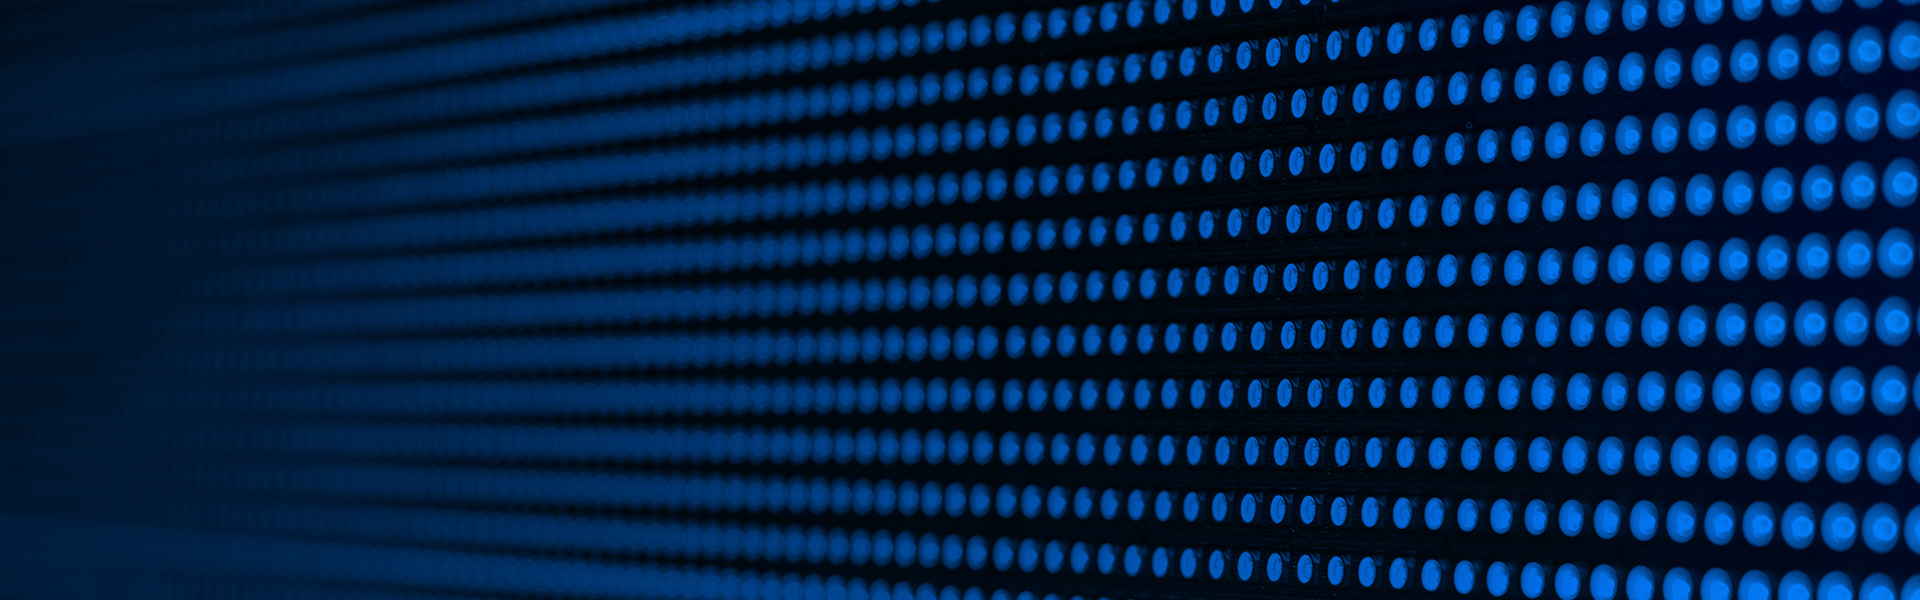 Dark blue image of LED screen